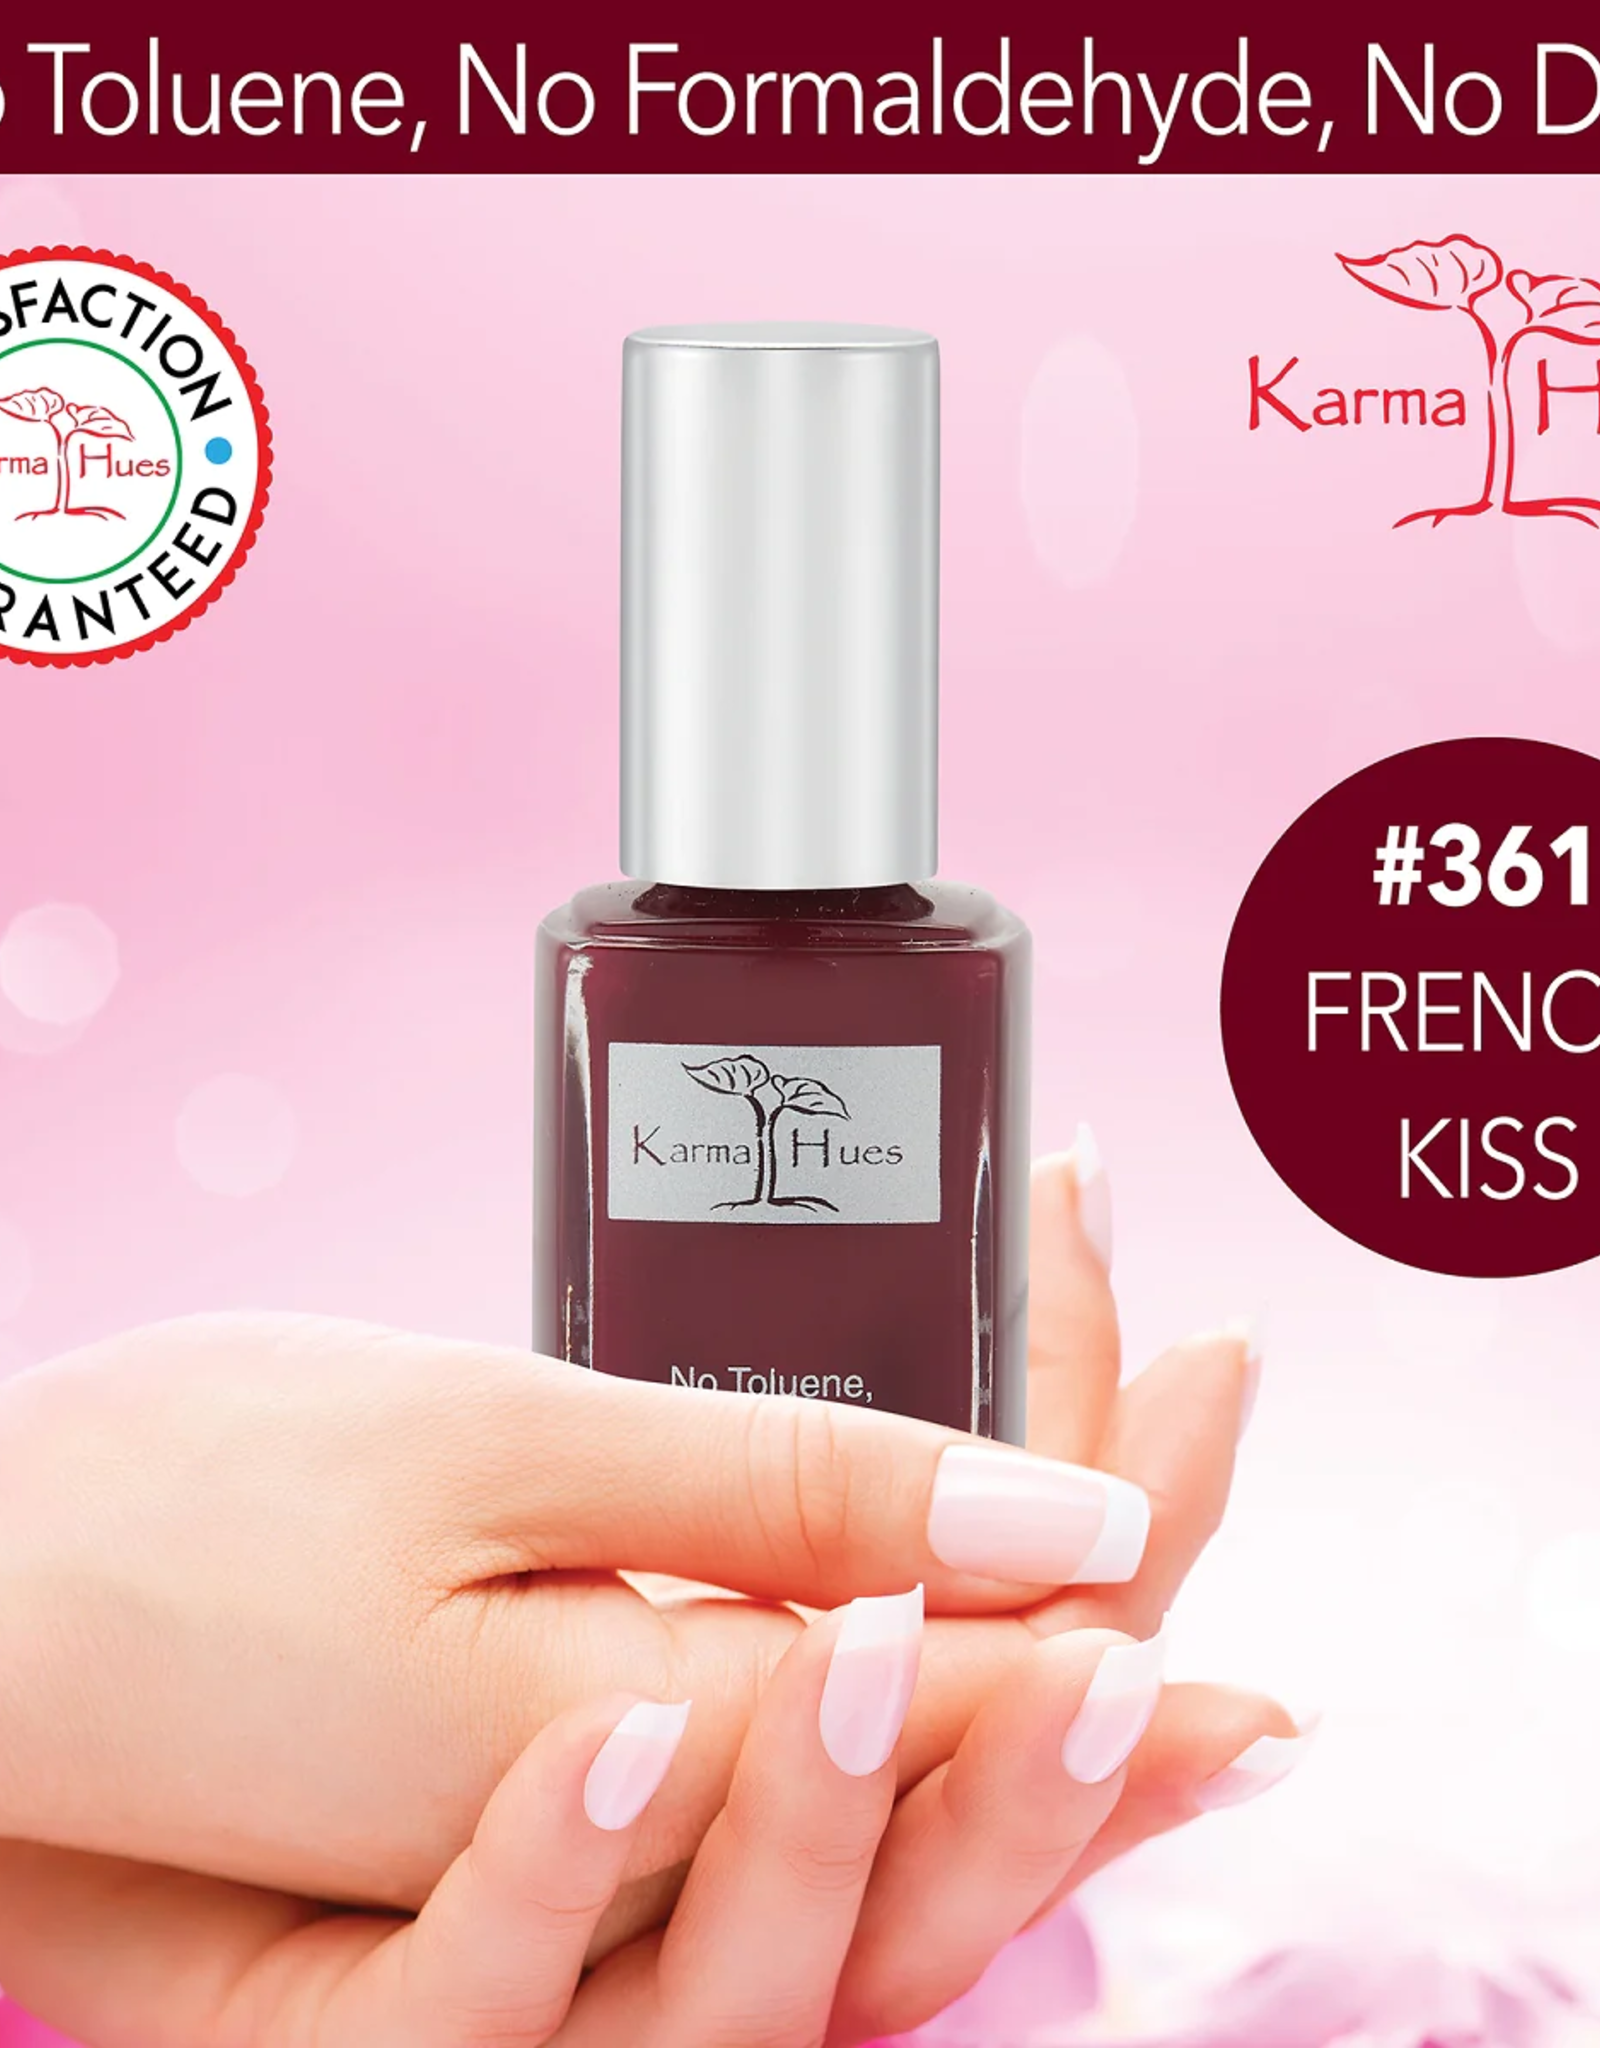 Karma Organics French Kiss